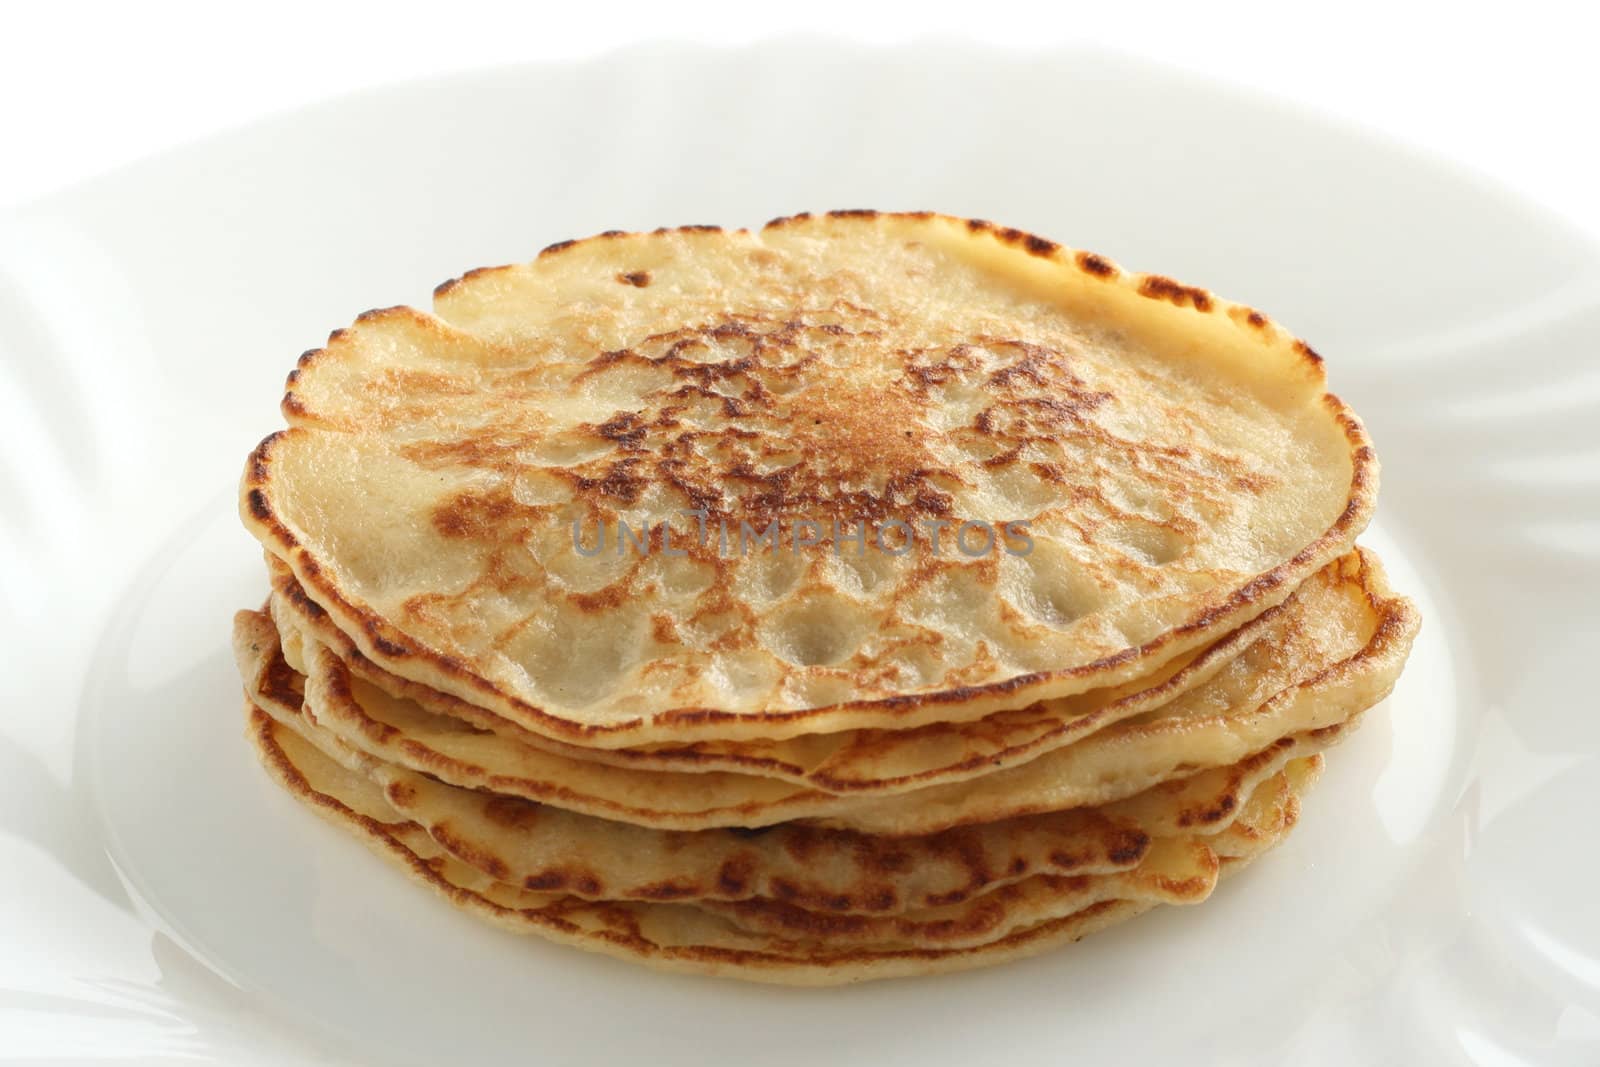 pancakes on a plate by nataliamylova